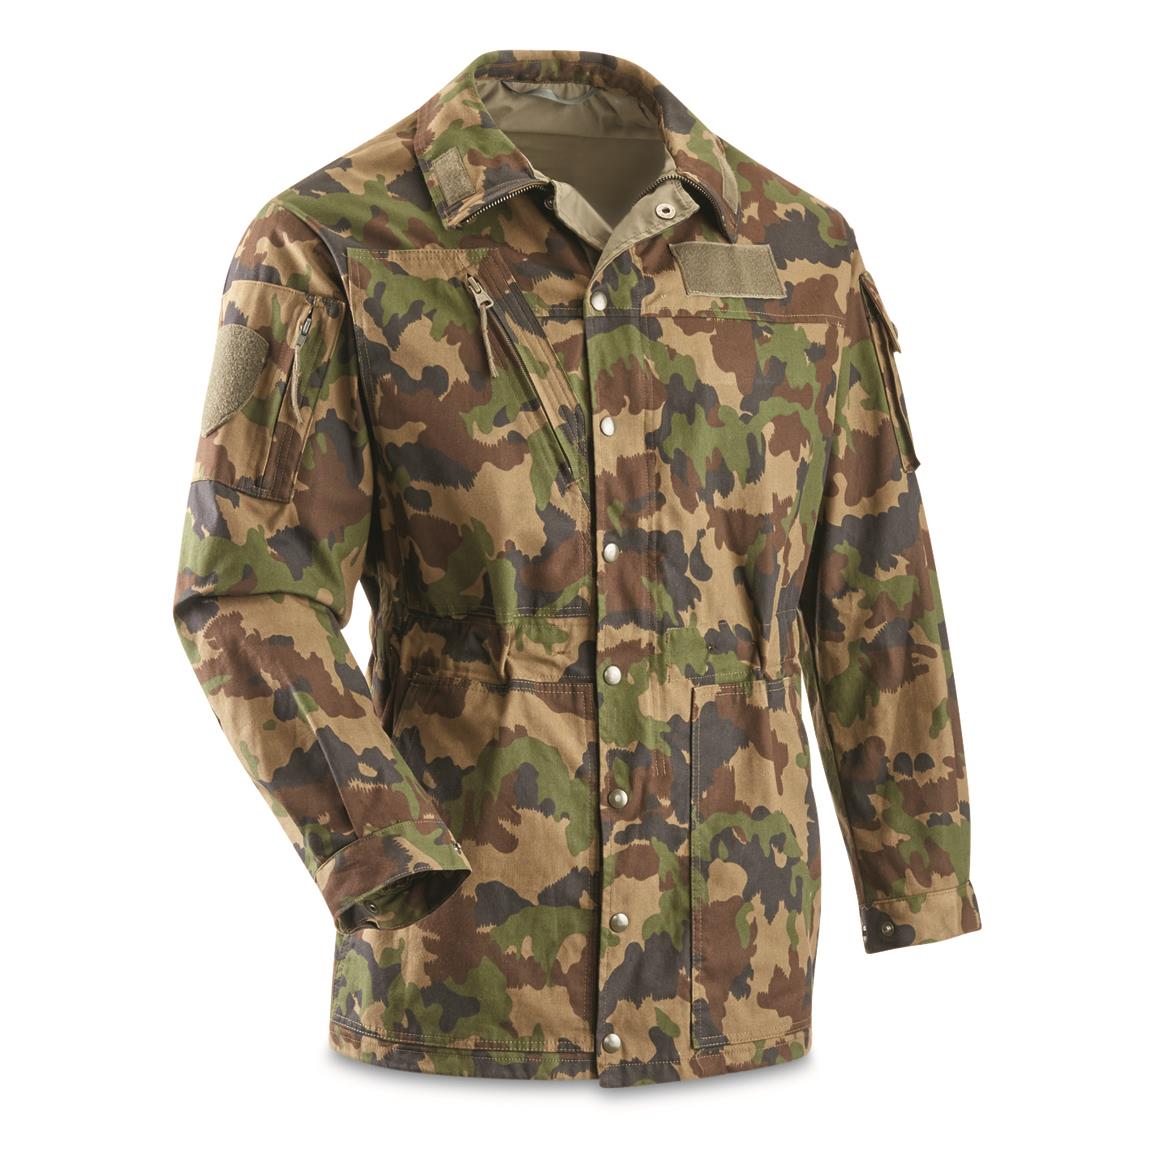 Military Outdoor Clothing Never Issued Foliage Polartec Fleece Jacket 2 X-Large/Regular 